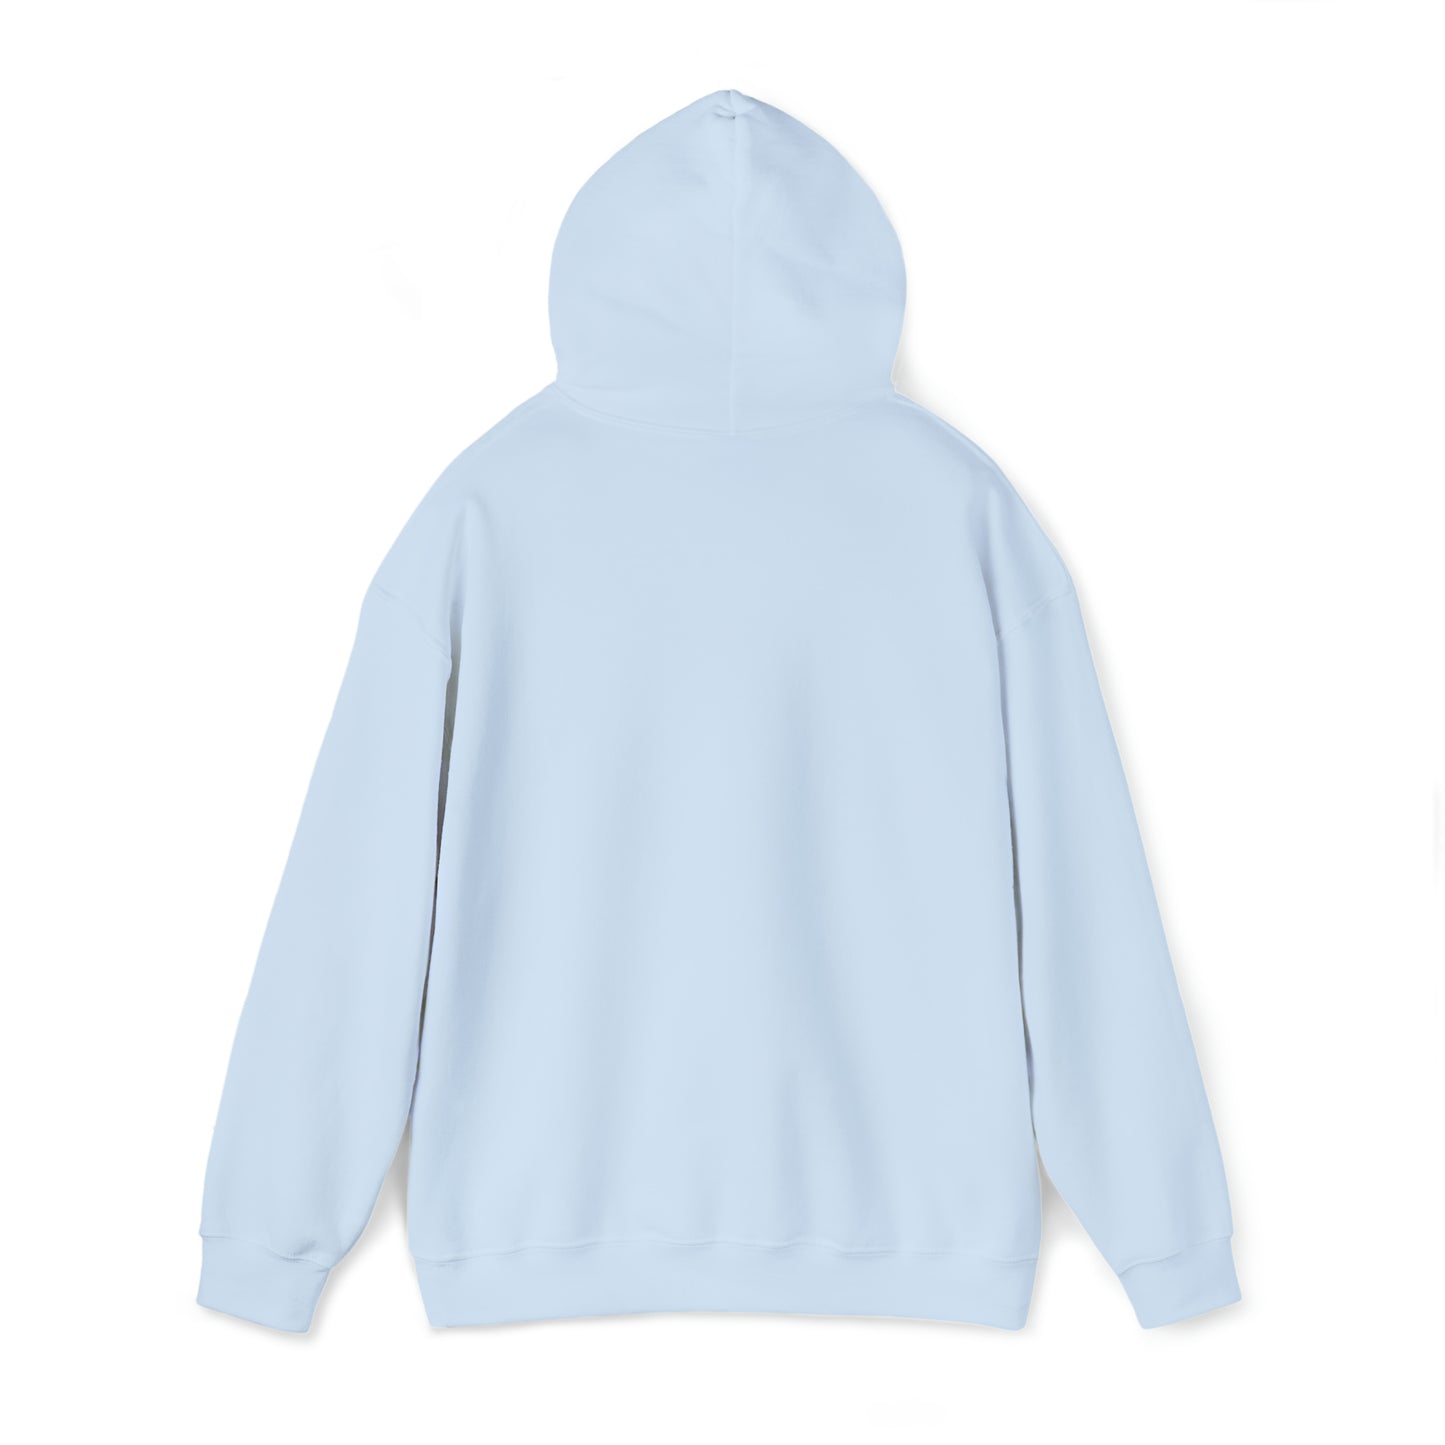 POETRY AND COFFEE Unisex Heavy Blend™ Hooded Sweatshirt